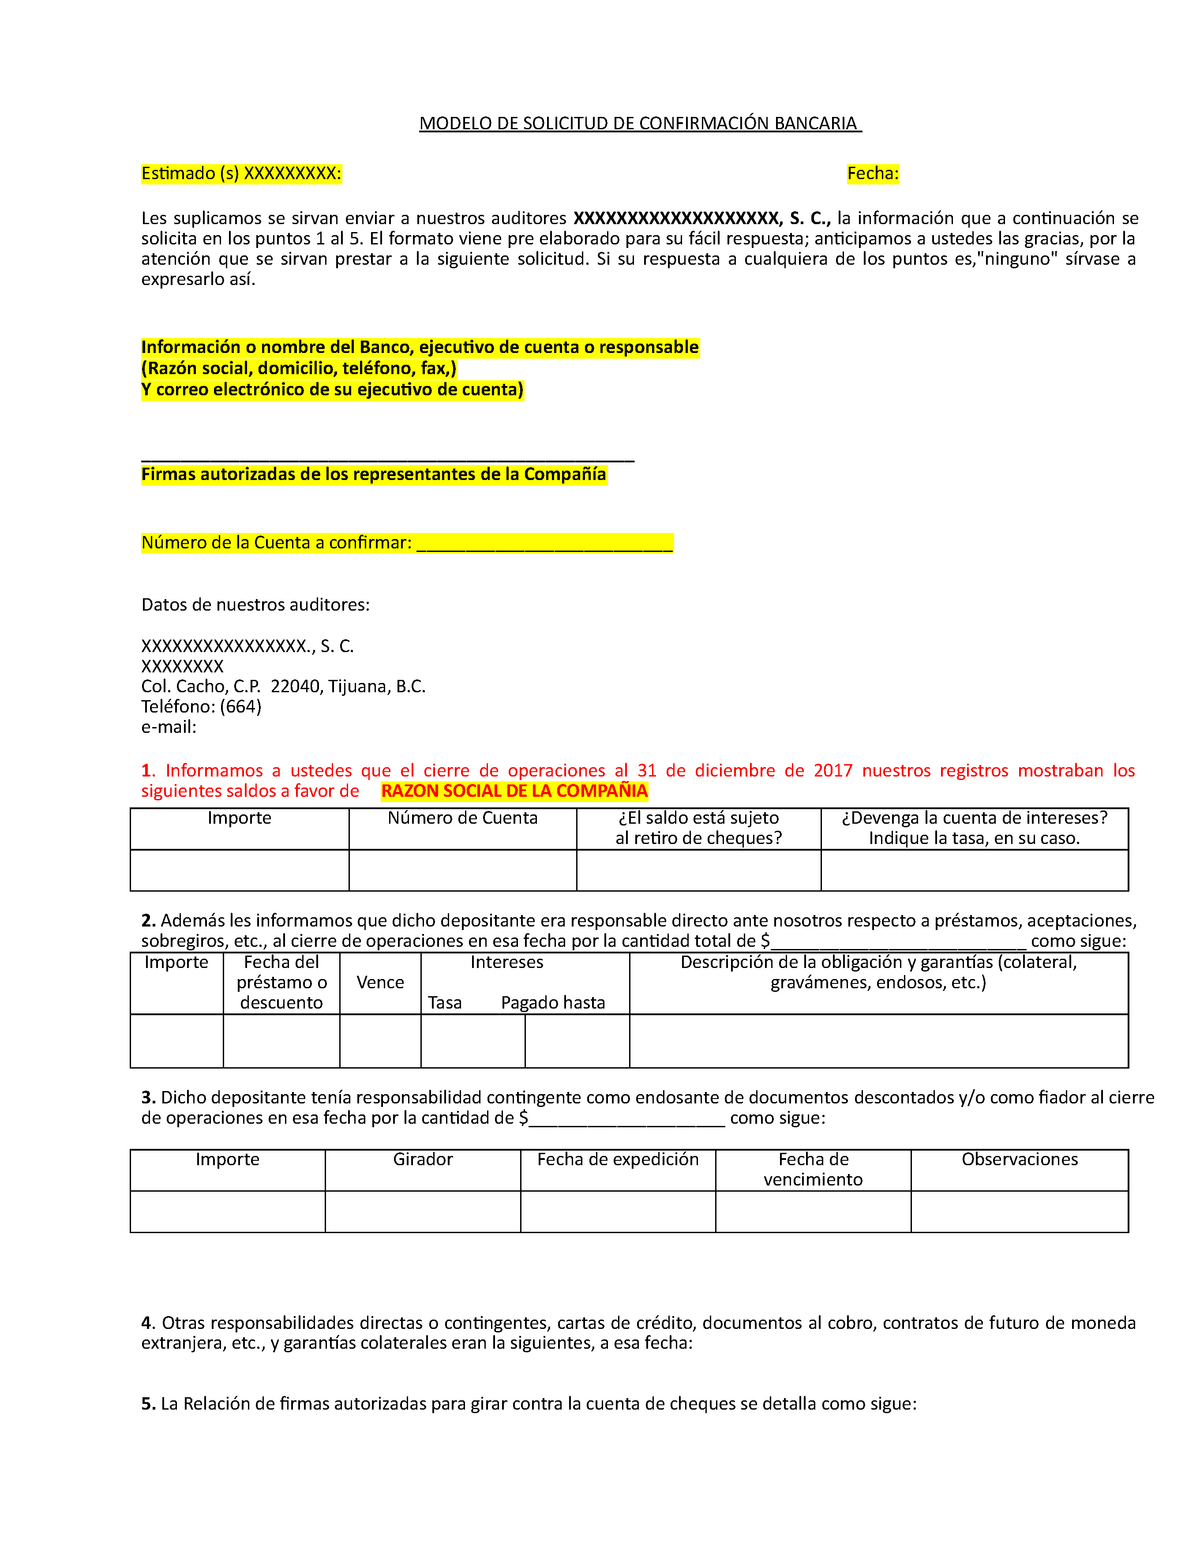 Modelo de Cartas de Solicitud de Confirmación - MODELO DE SOLICITUD DE  CONFIRMACIÓN BANCARIA - Studocu